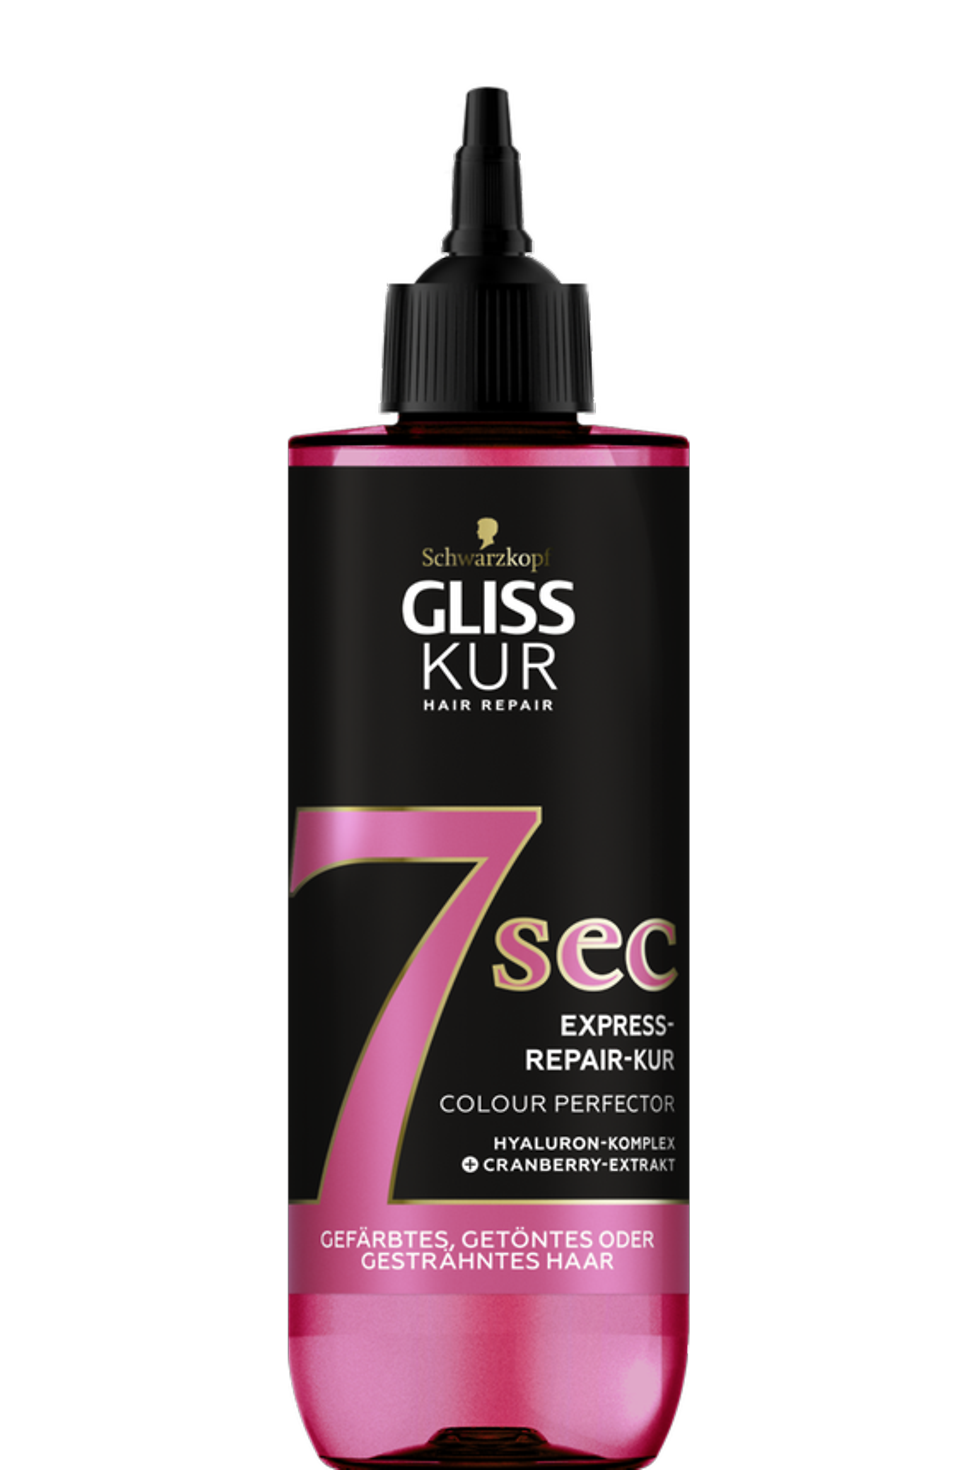 Gliss Kur 7 Sec Express-Repair-Kur Colour Perfector